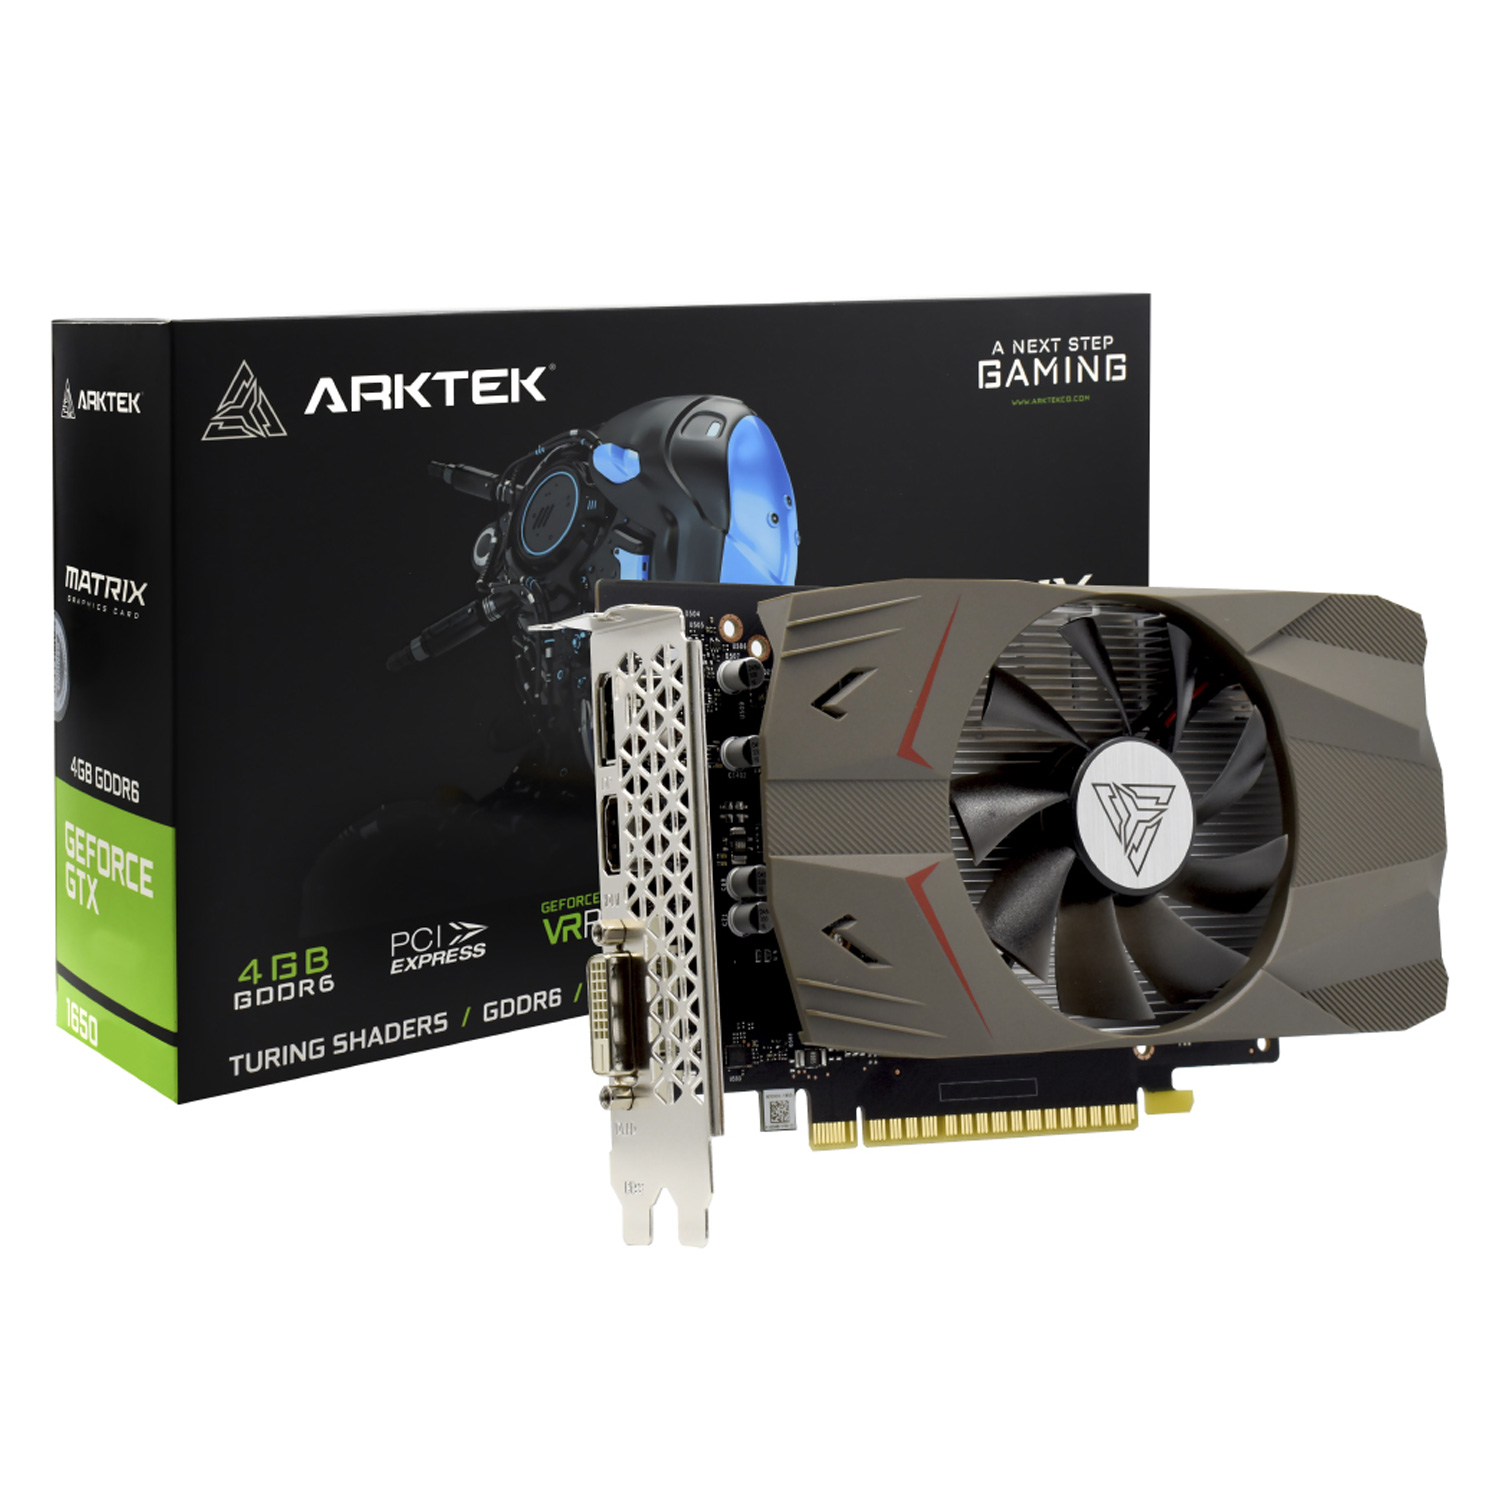 Placa de Vídeo Arktek Matrix Gaming NVIDIA GeForce GTX-1650 4GB DDR6 - AKN1650D6S4GHS1